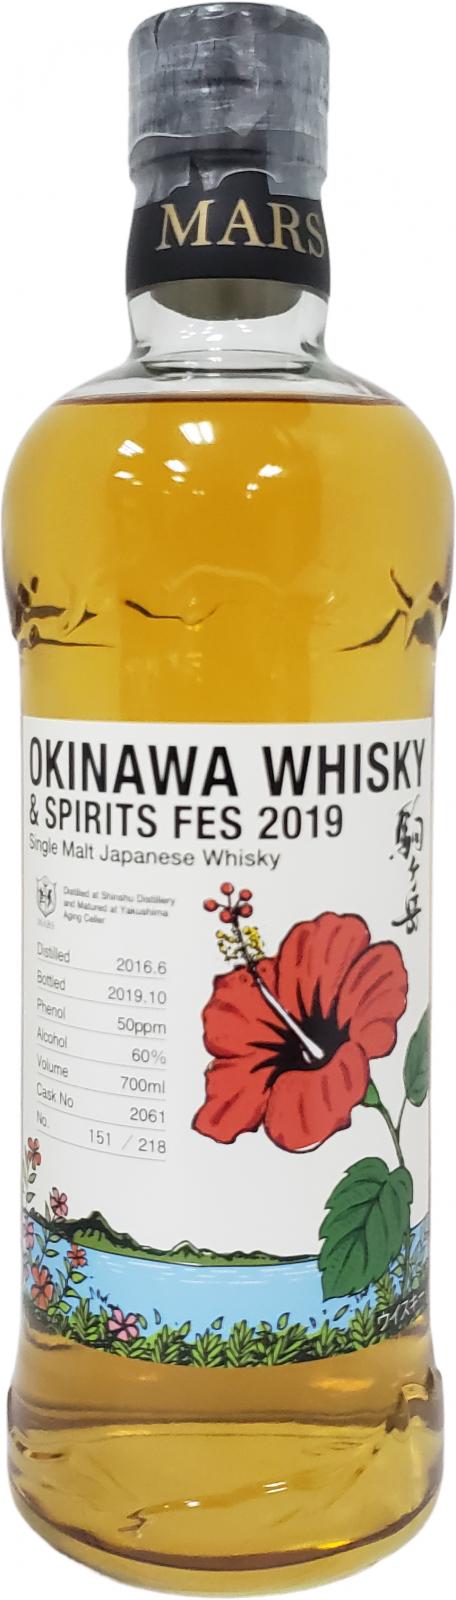 Mars 2016 #2061 Okinawa whisky & spirits festival 2019 60% 700ml